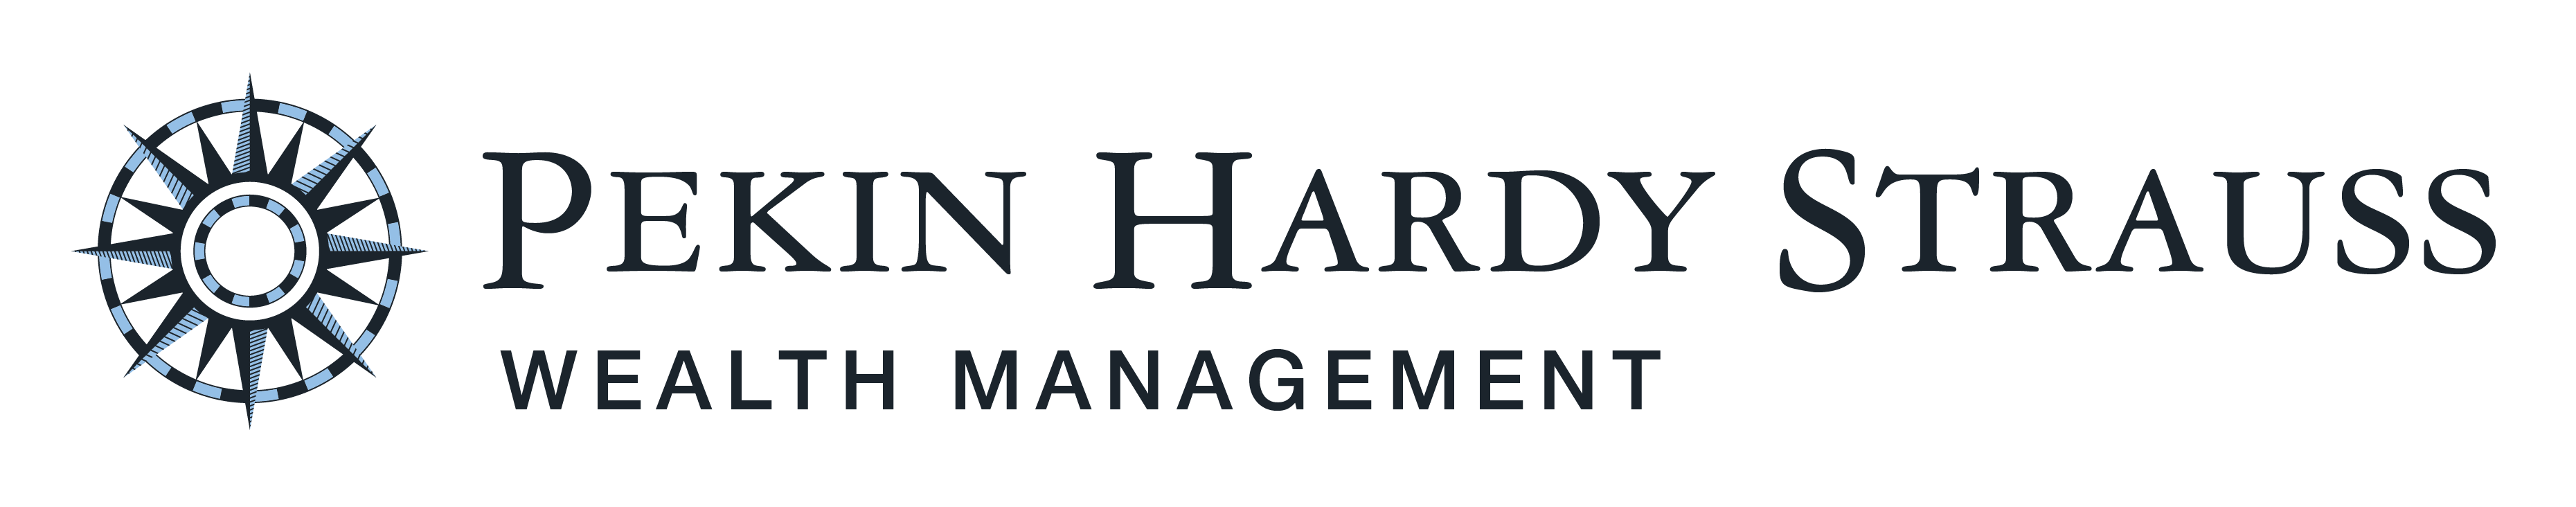 pekin hardy strauss wealth management logo